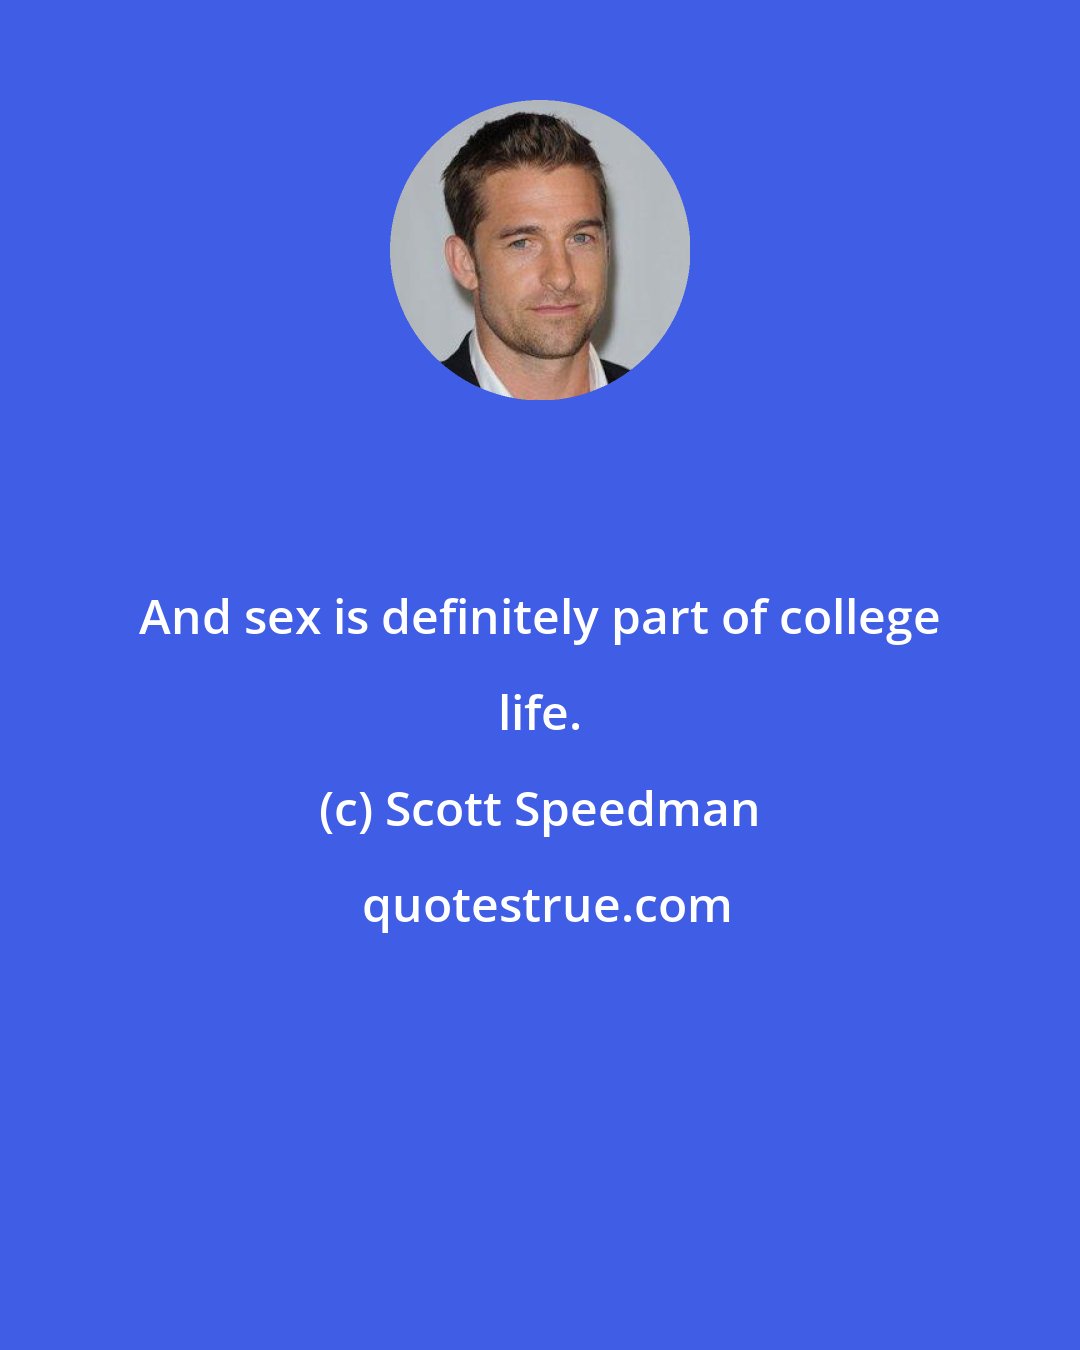 Scott Speedman: And sex is definitely part of college life.